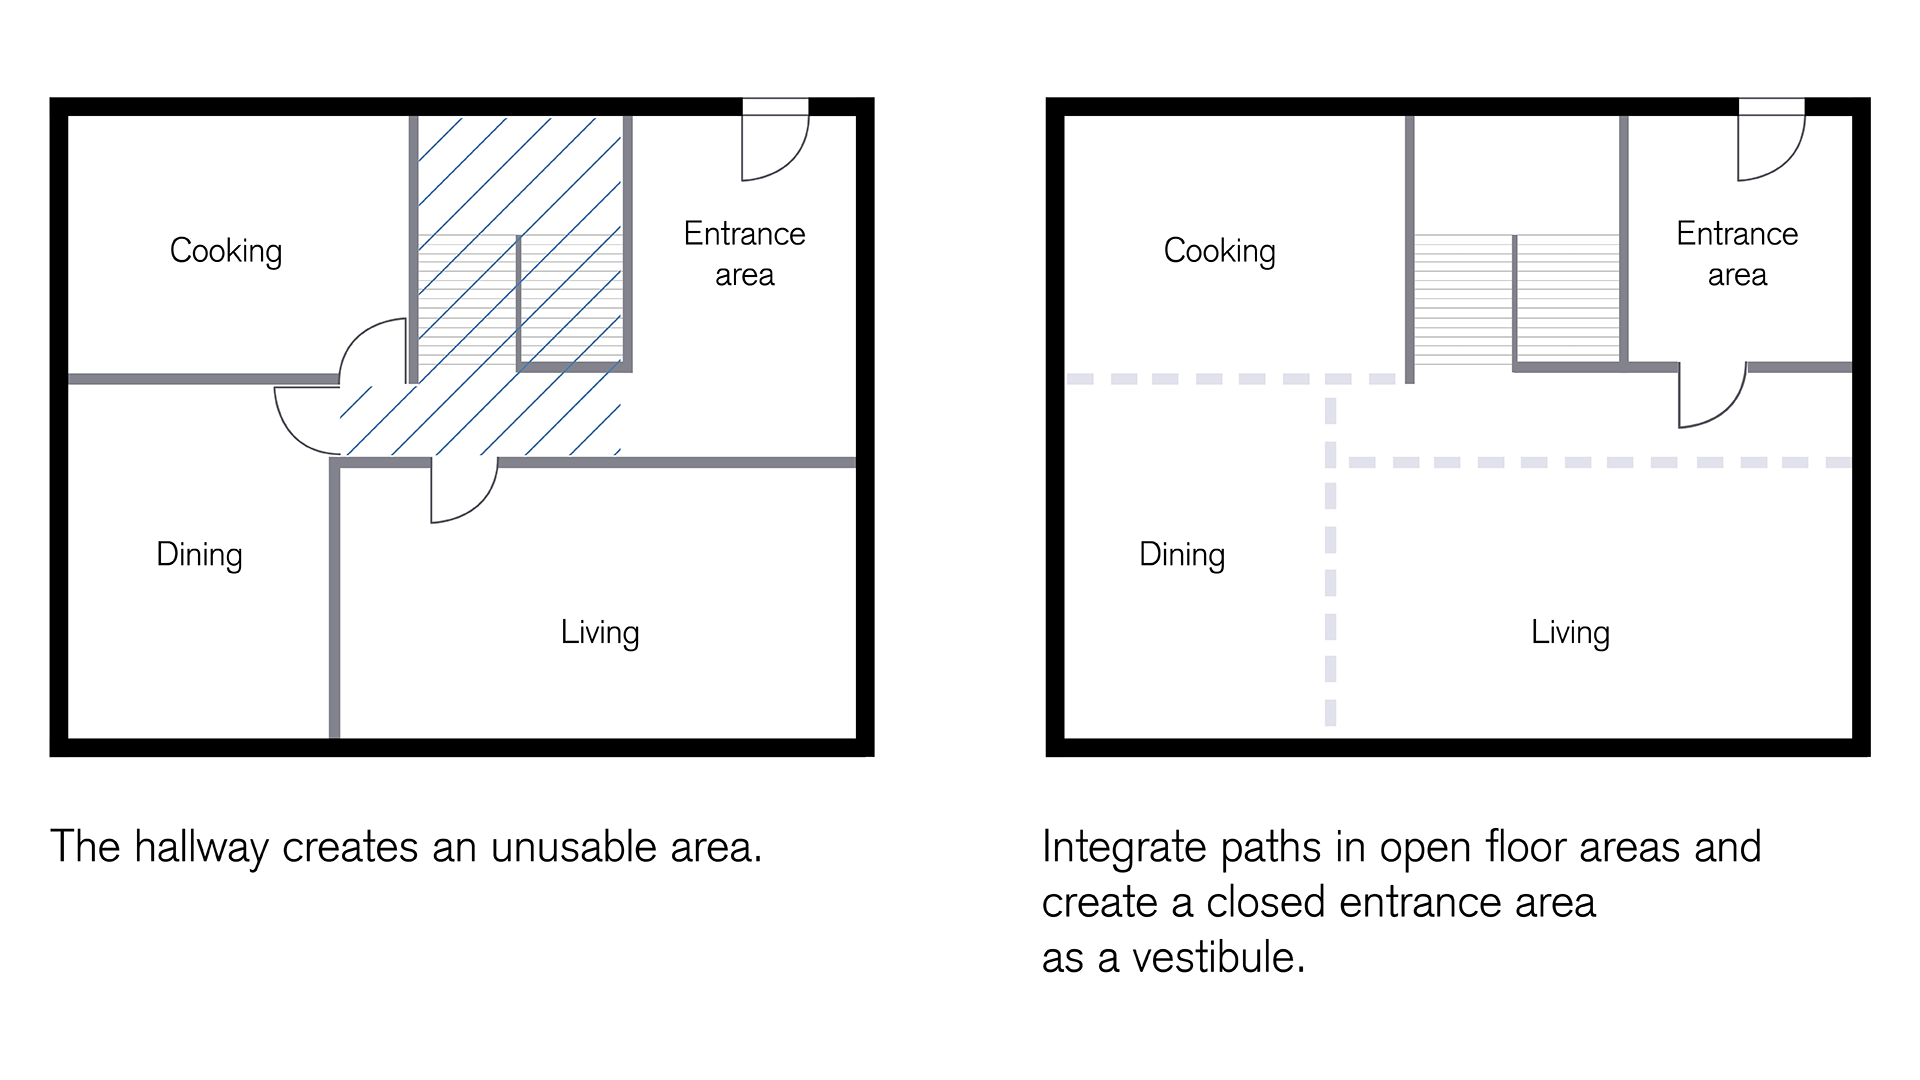 Efficiently using habitable floor area: Reducing traffic paths